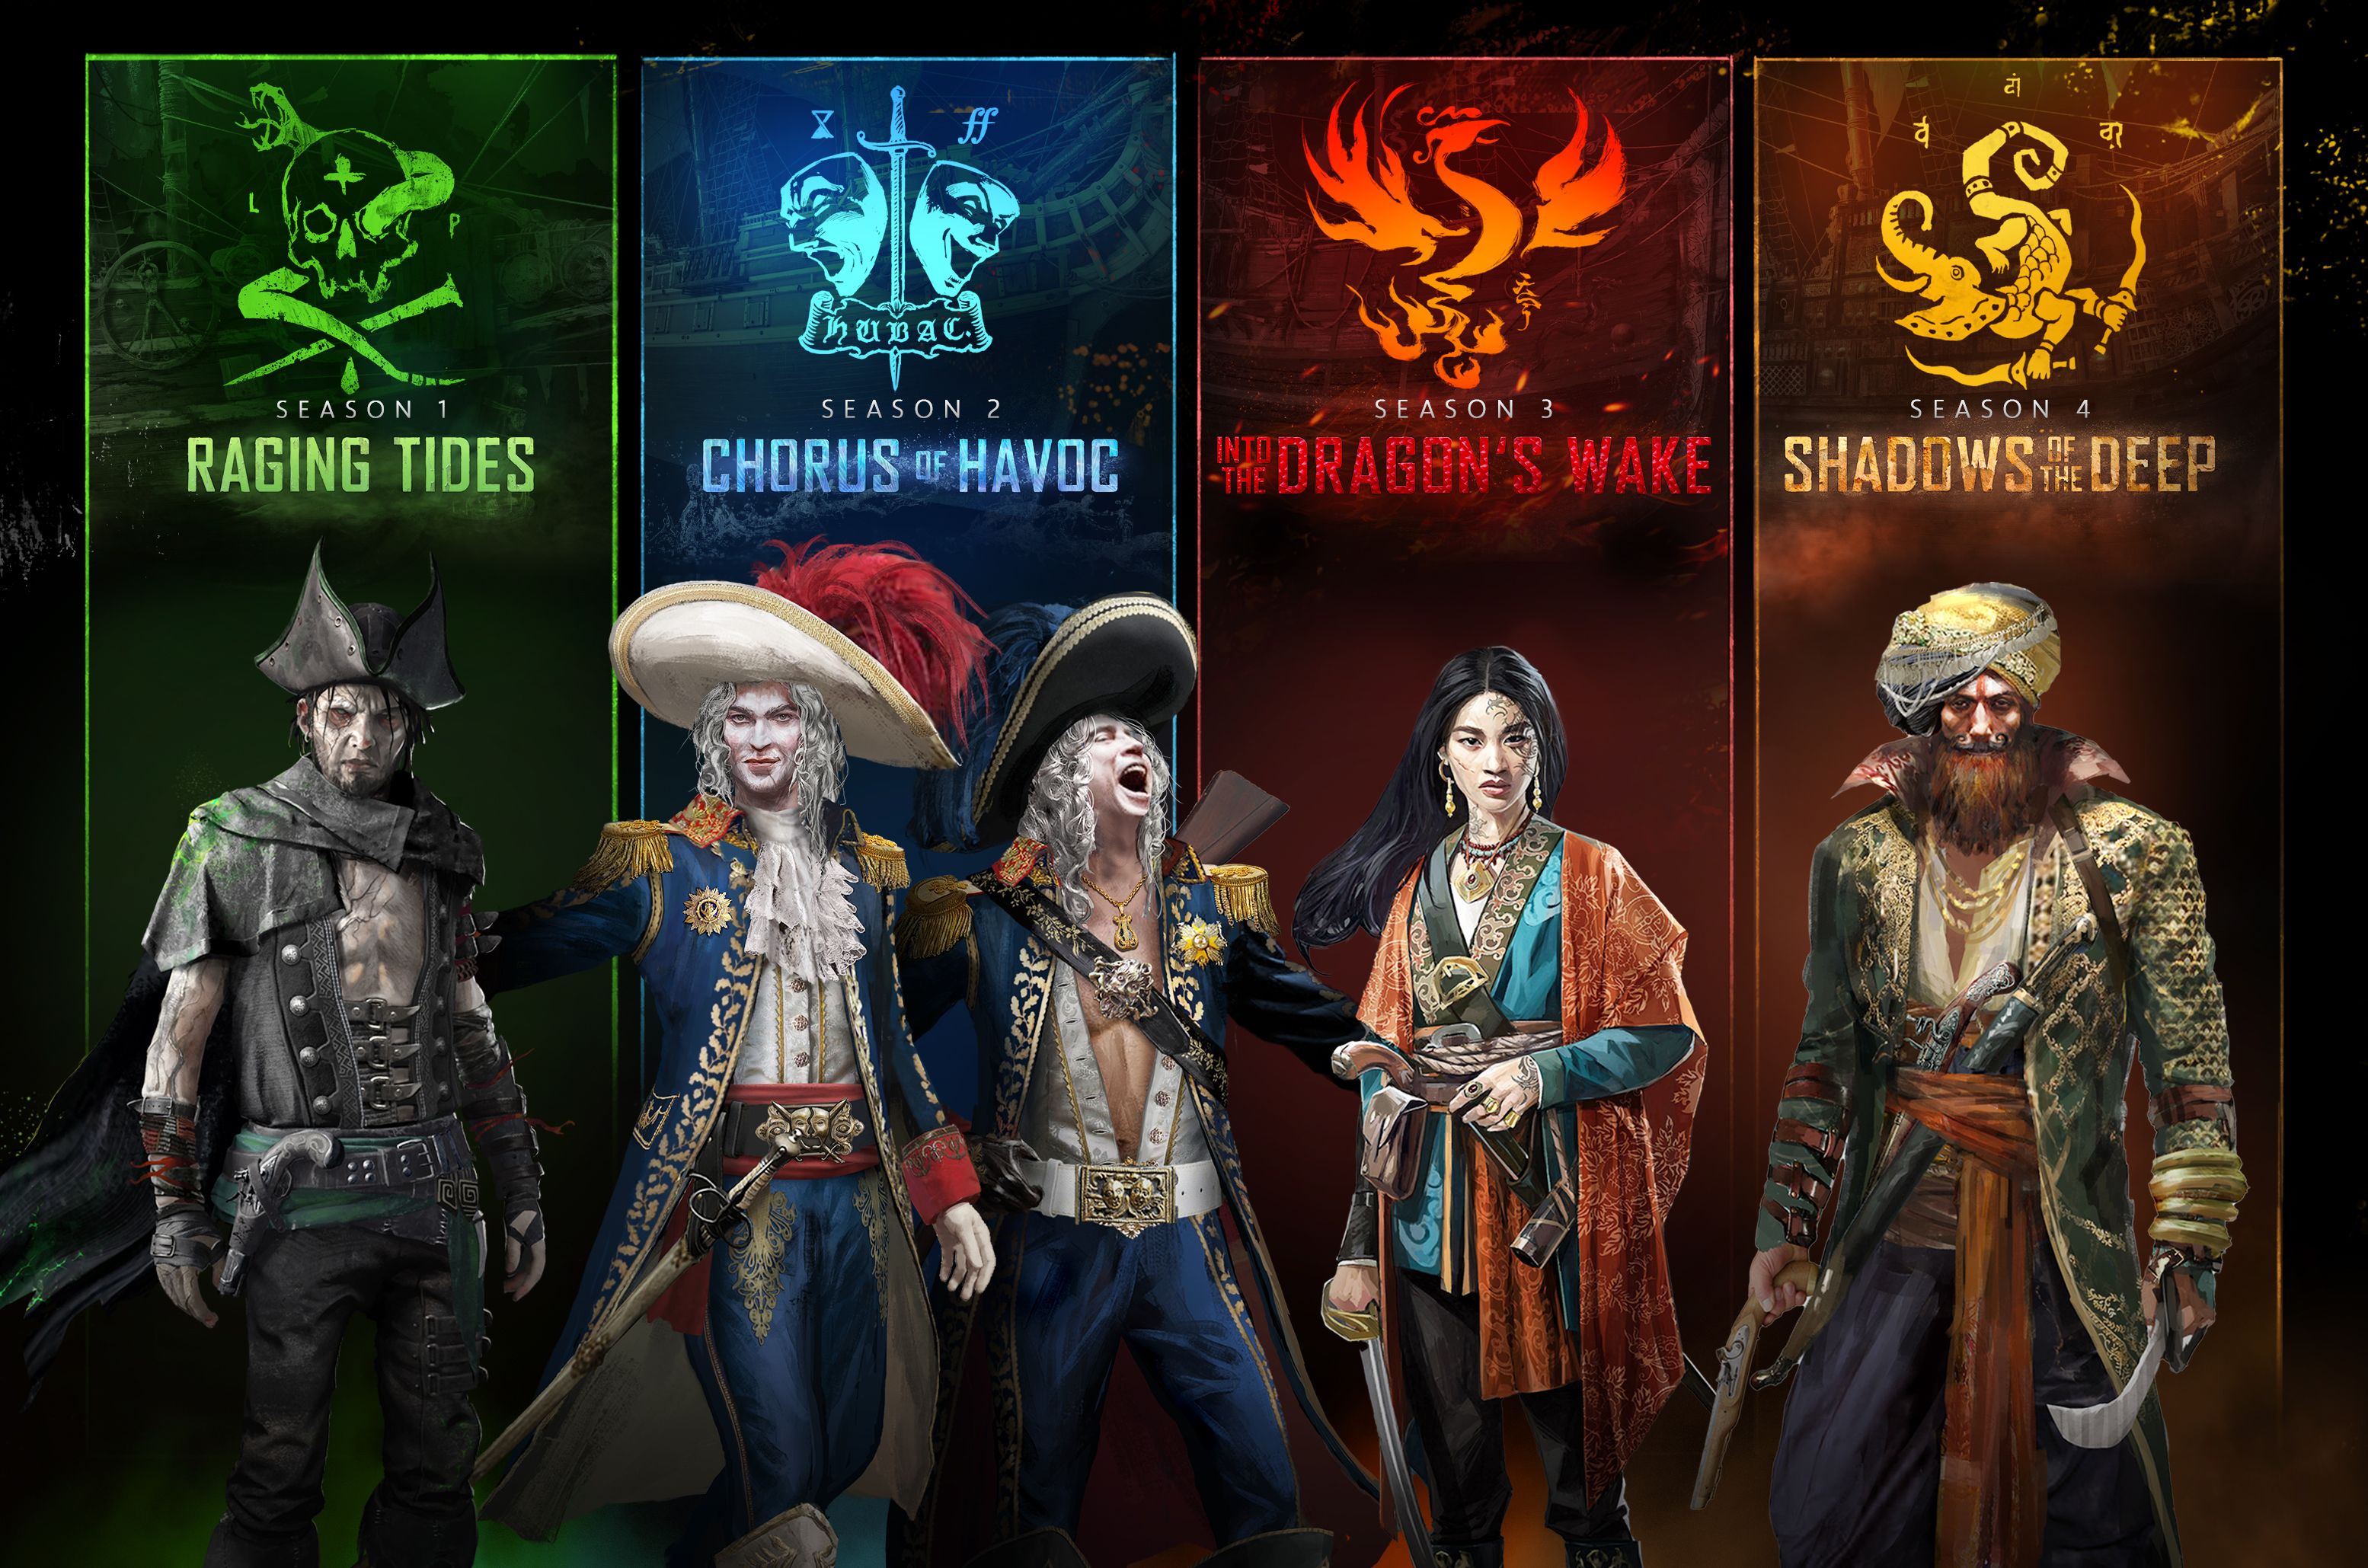 I 4 pirati leggendari da affrontare durante l'anno